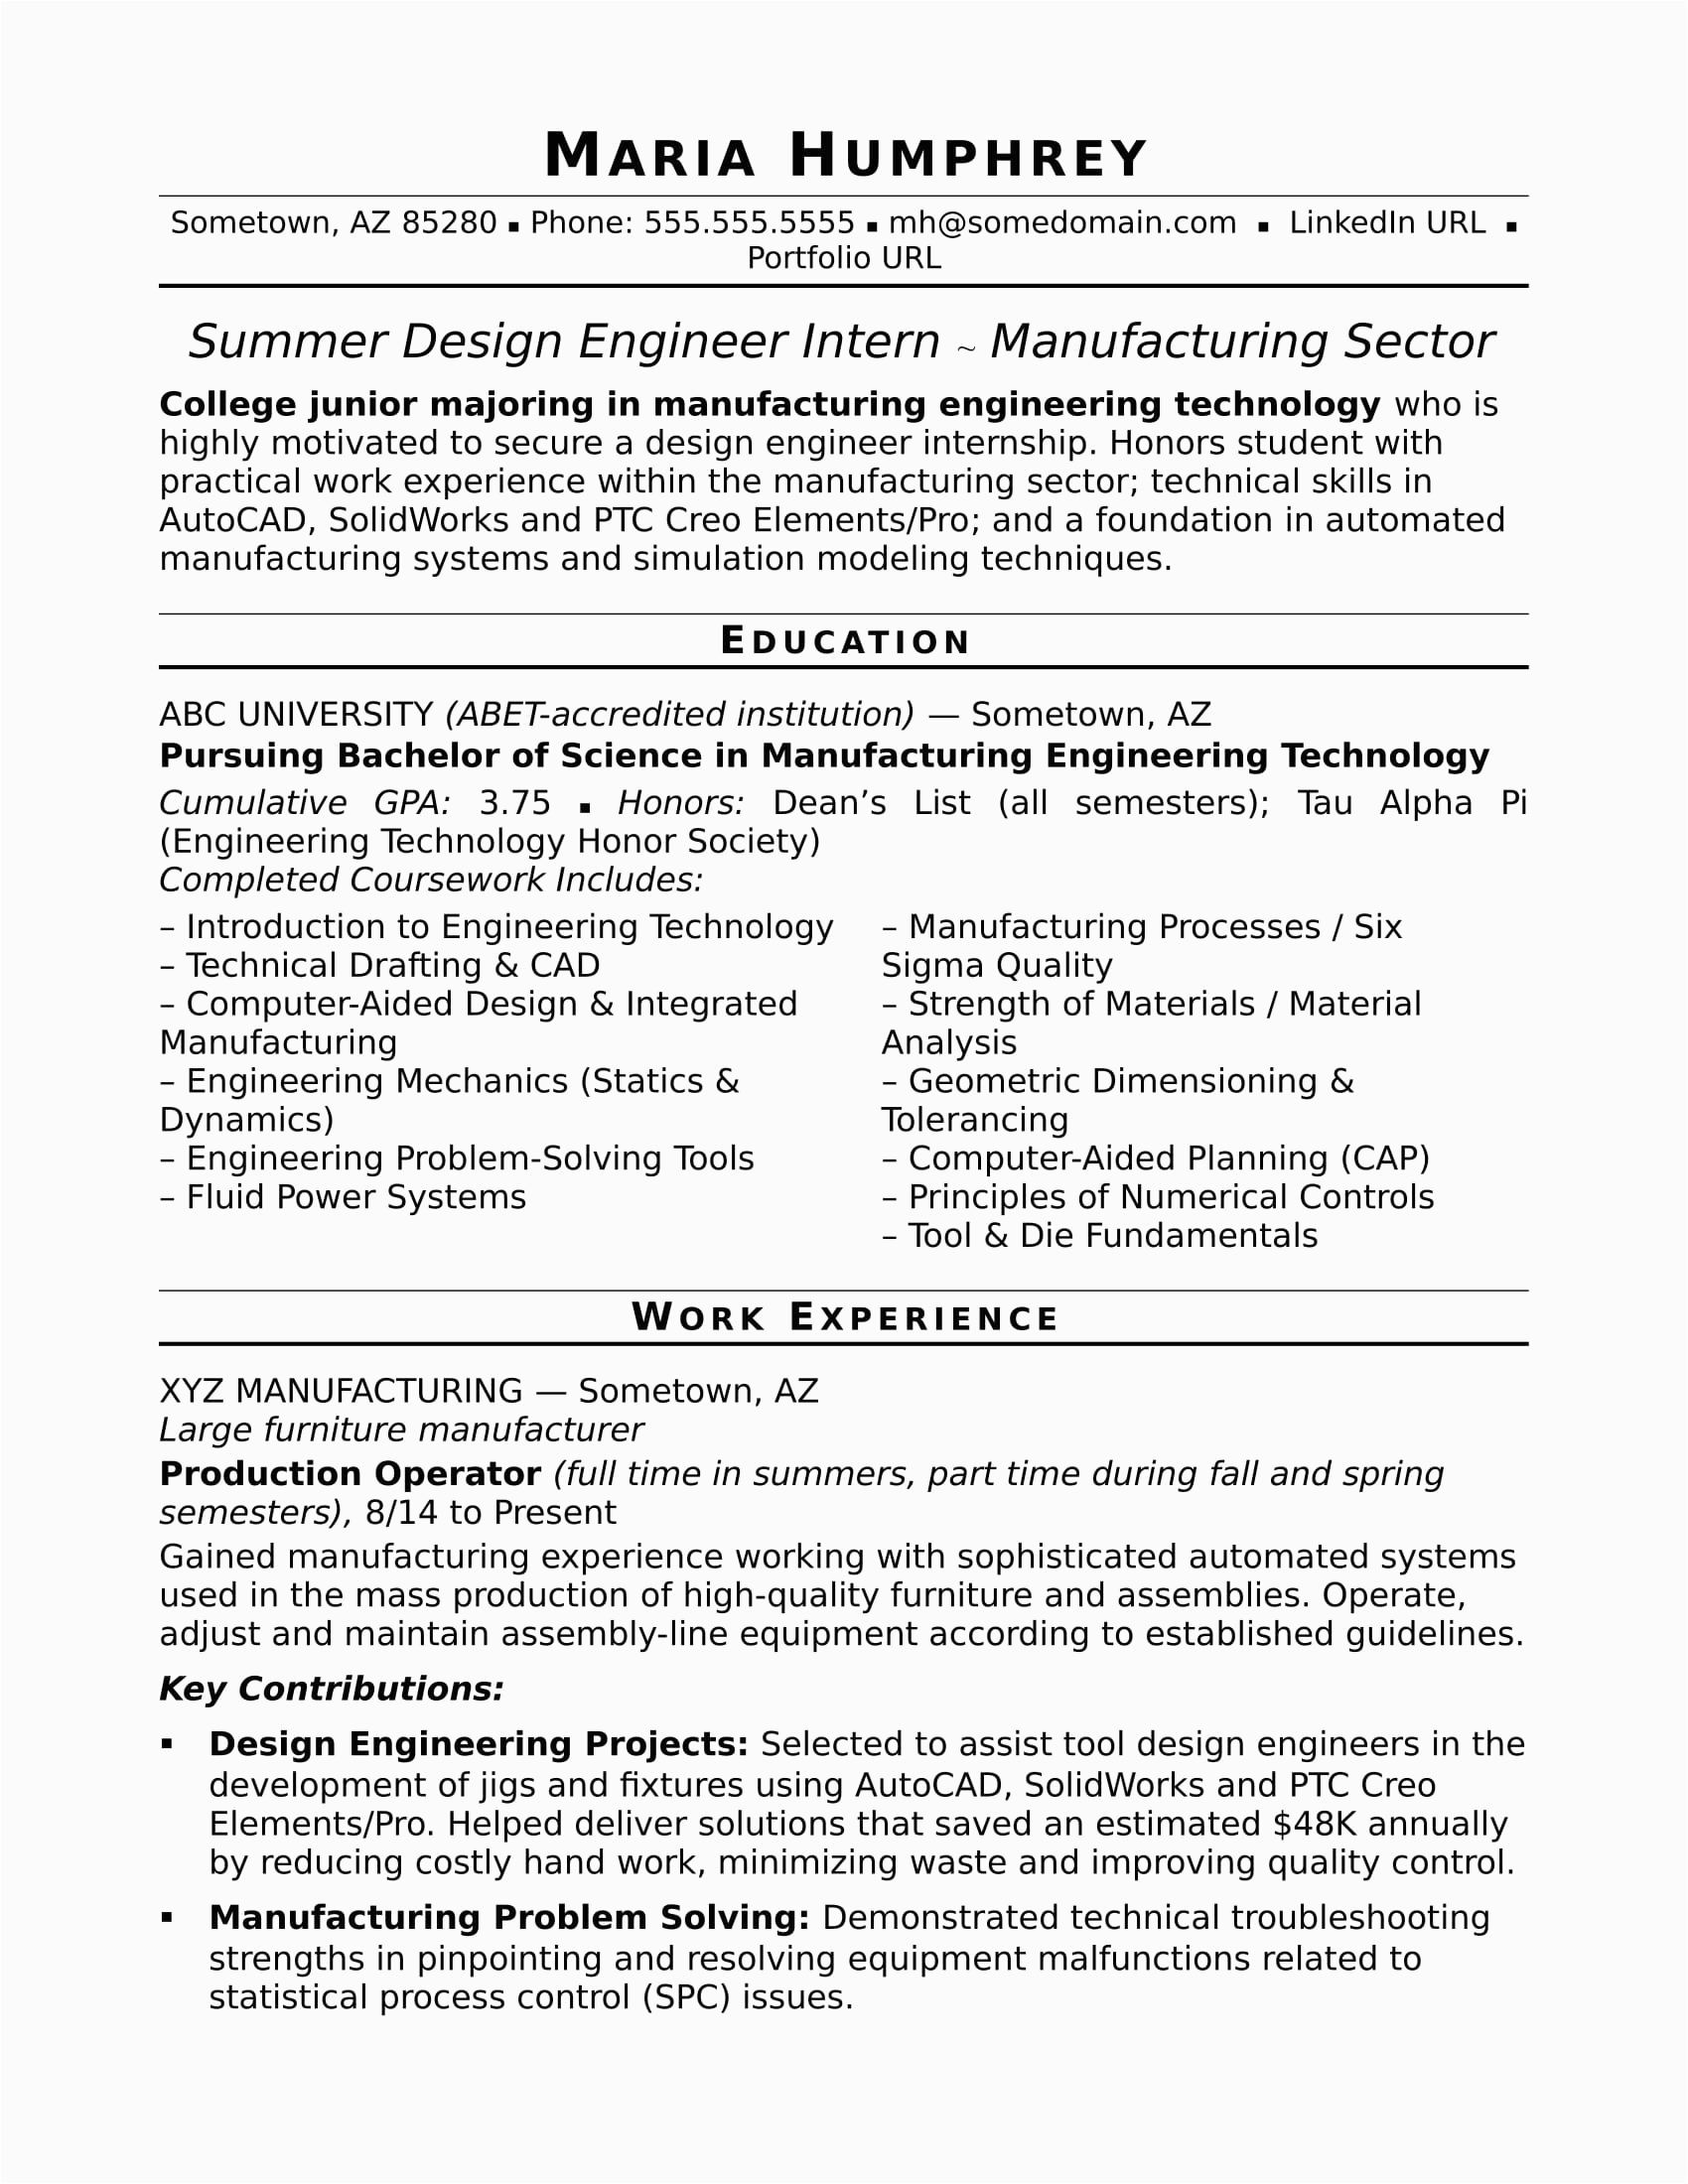 Sample Of Entry Level Engineering Resume Sample Resume for An Entry Level Design Engineer